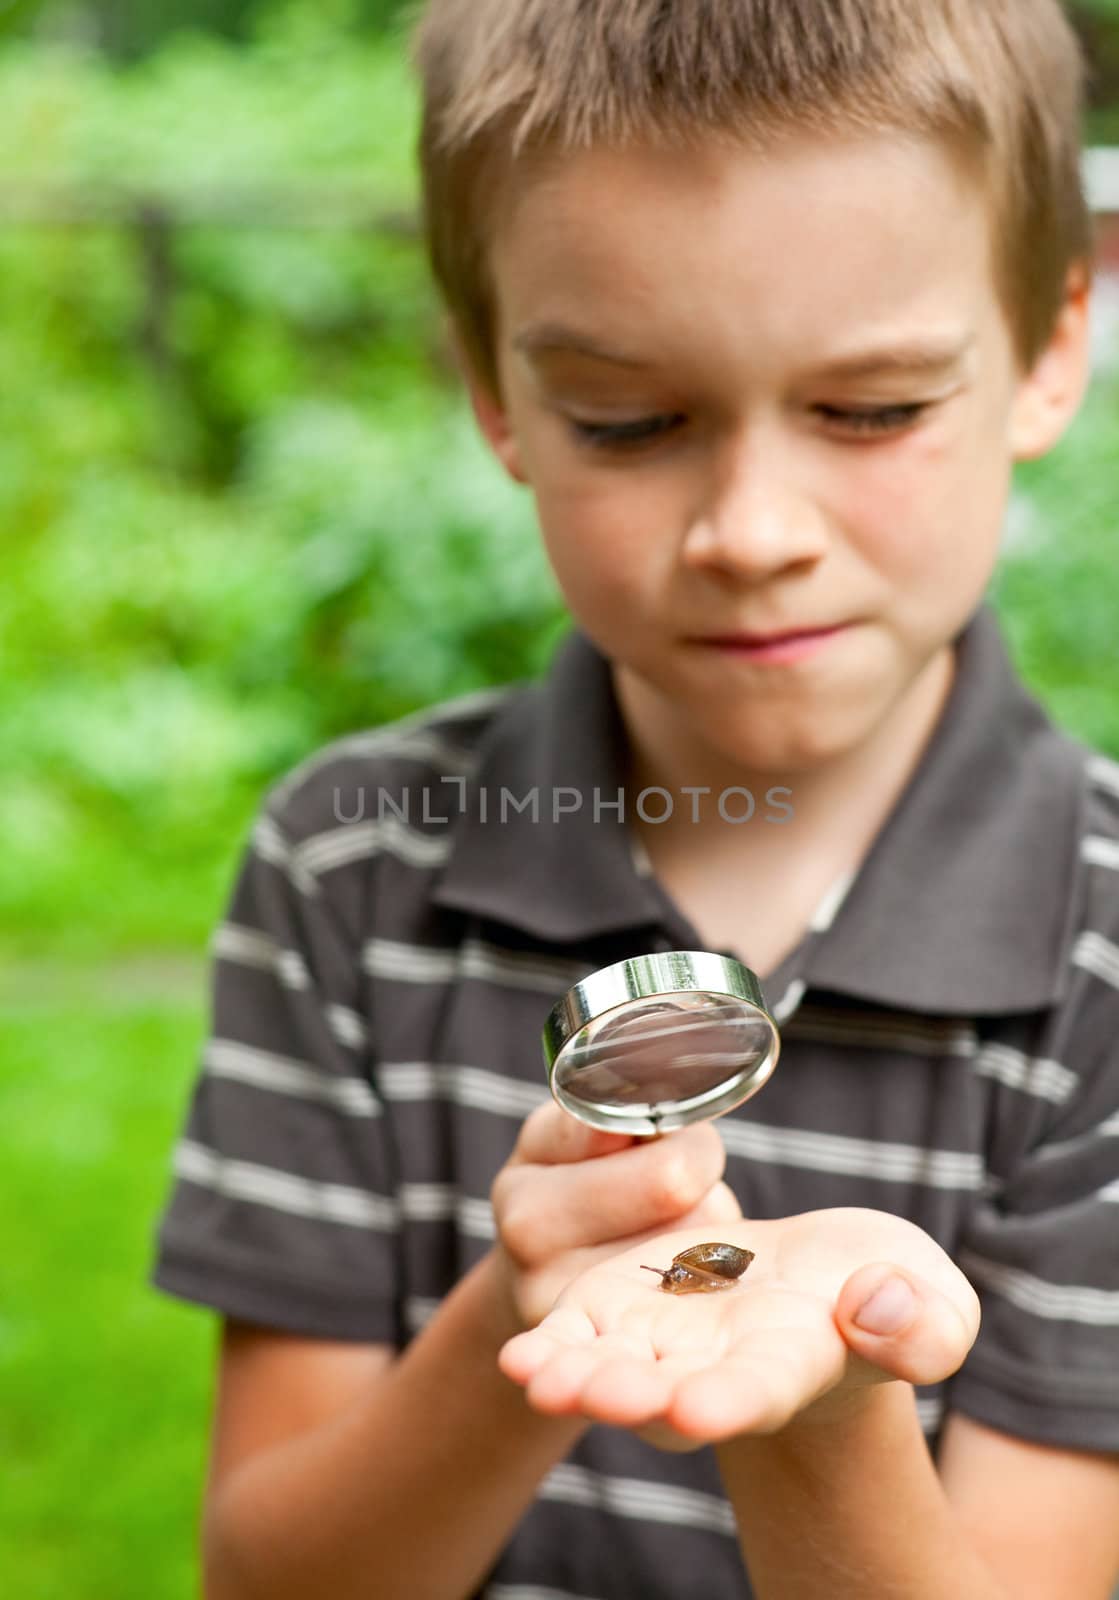 Kid observing snail by naumoid